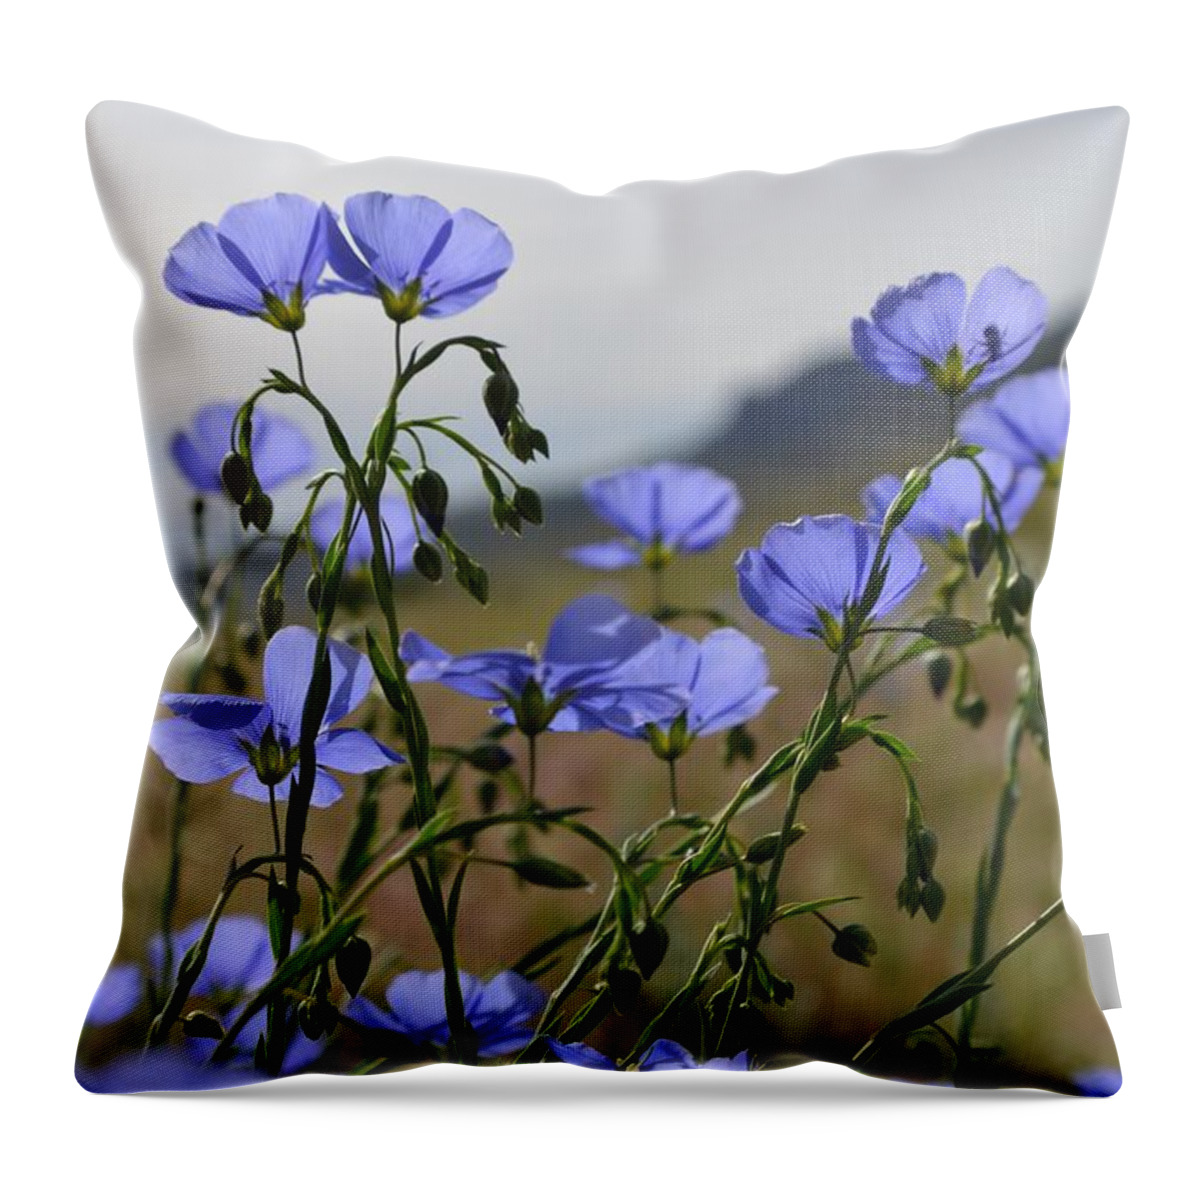 Wildflower Throw Pillow featuring the photograph Flax by Alden White Ballard